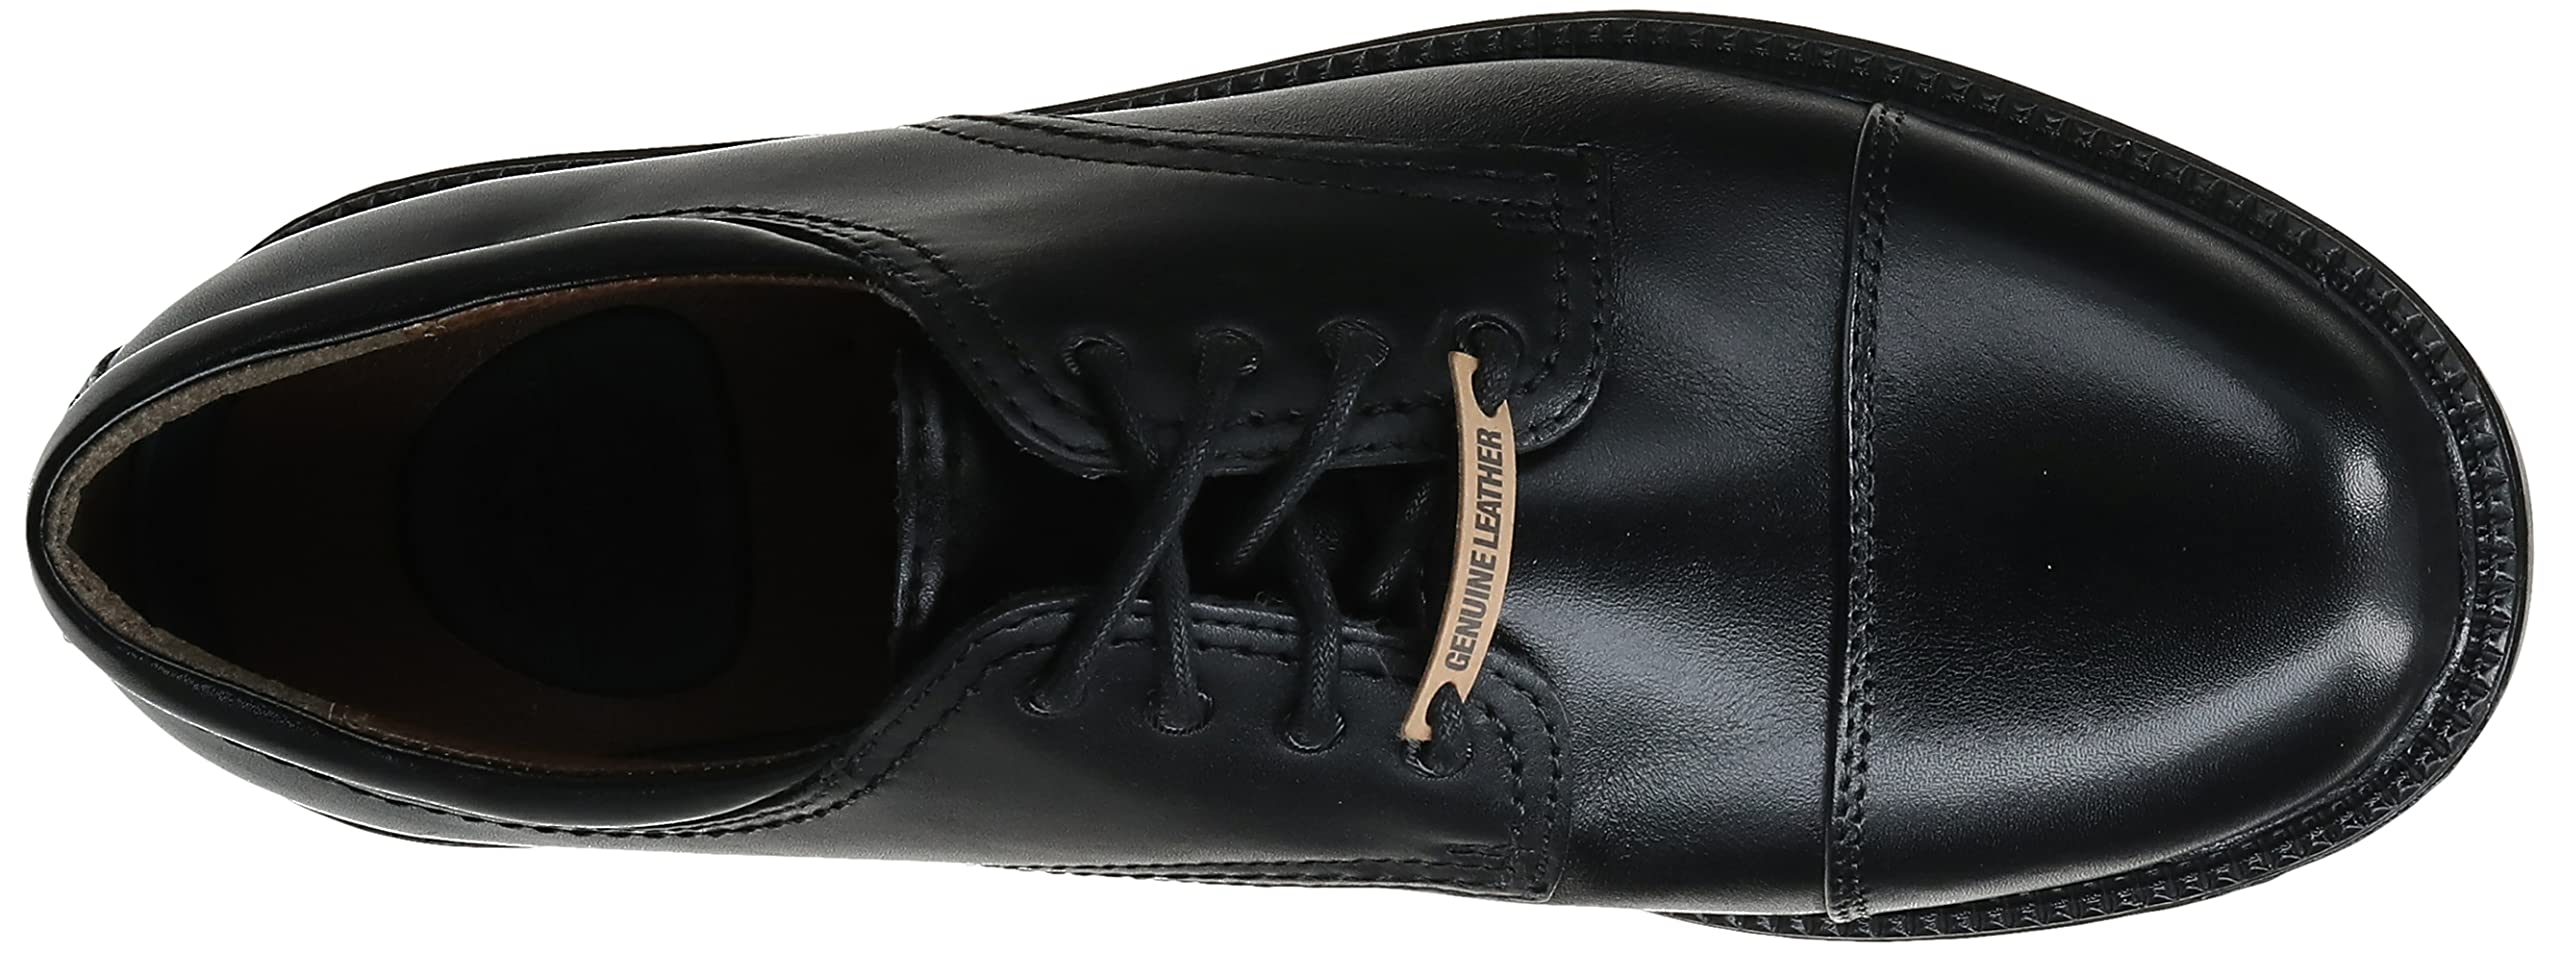 Dockers Men’s Gordon Leather Oxford Dress Shoe